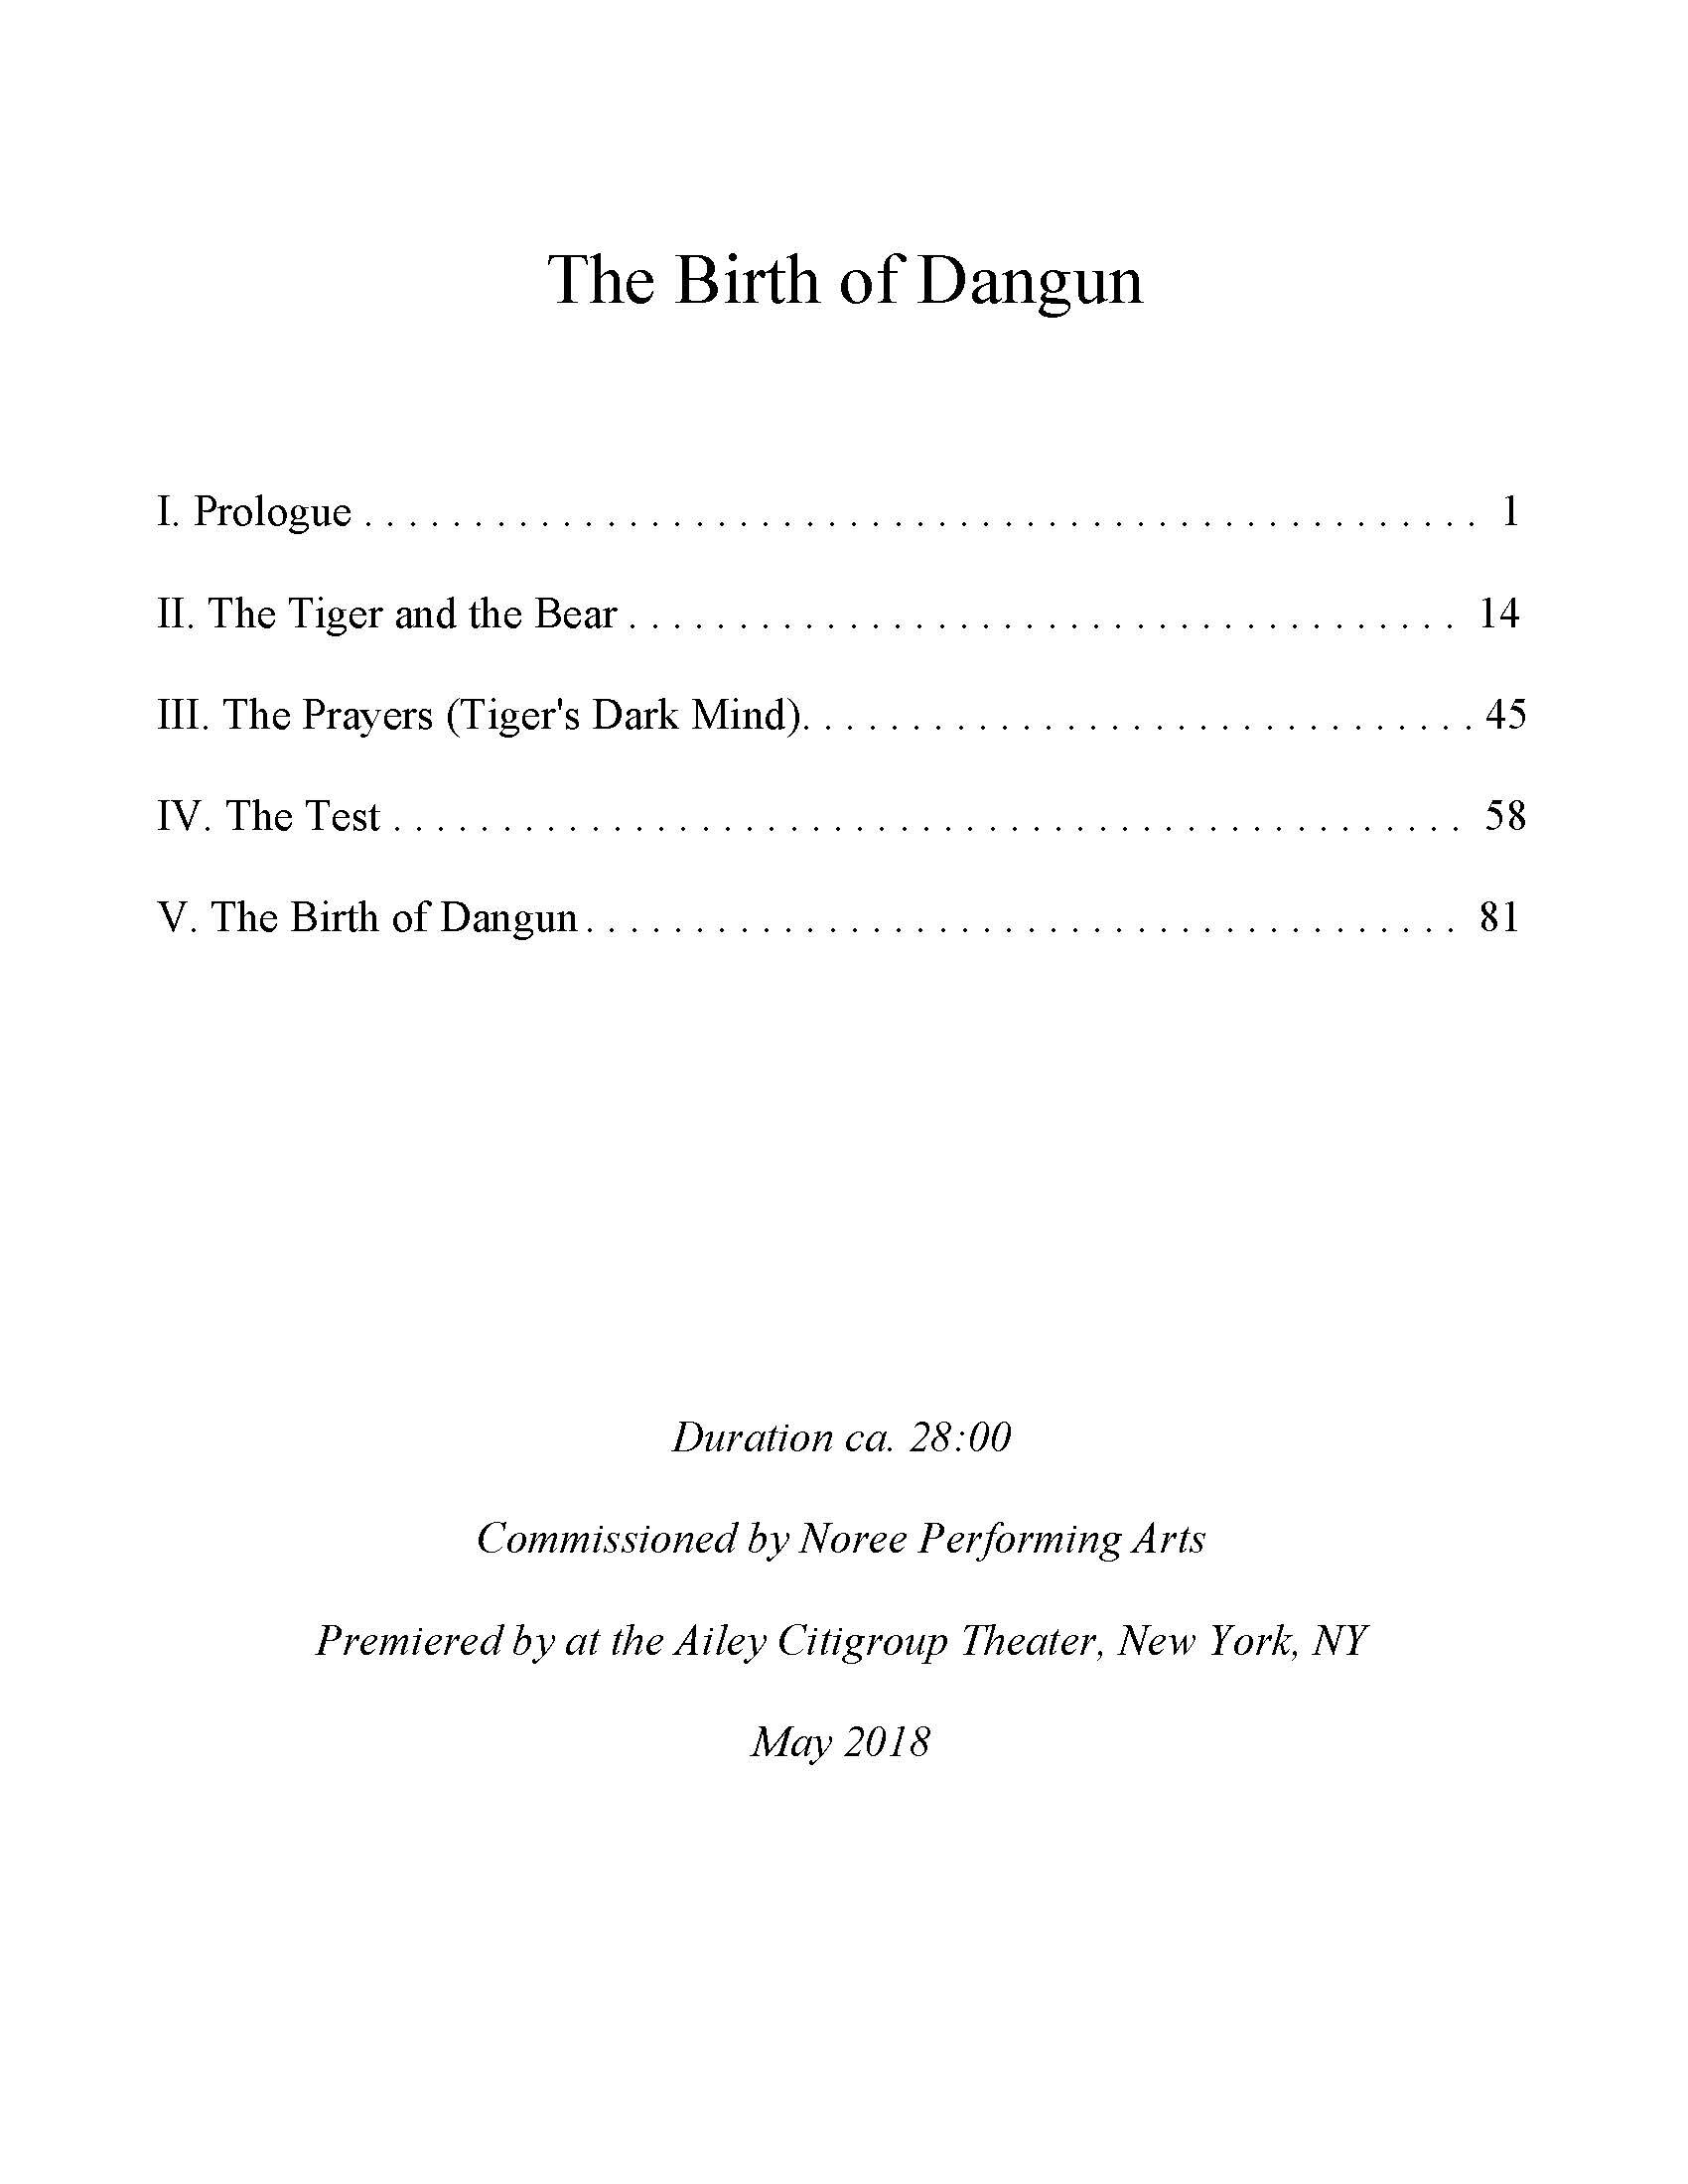 The Birth of Dangun - Complete Score_Page_005.jpg